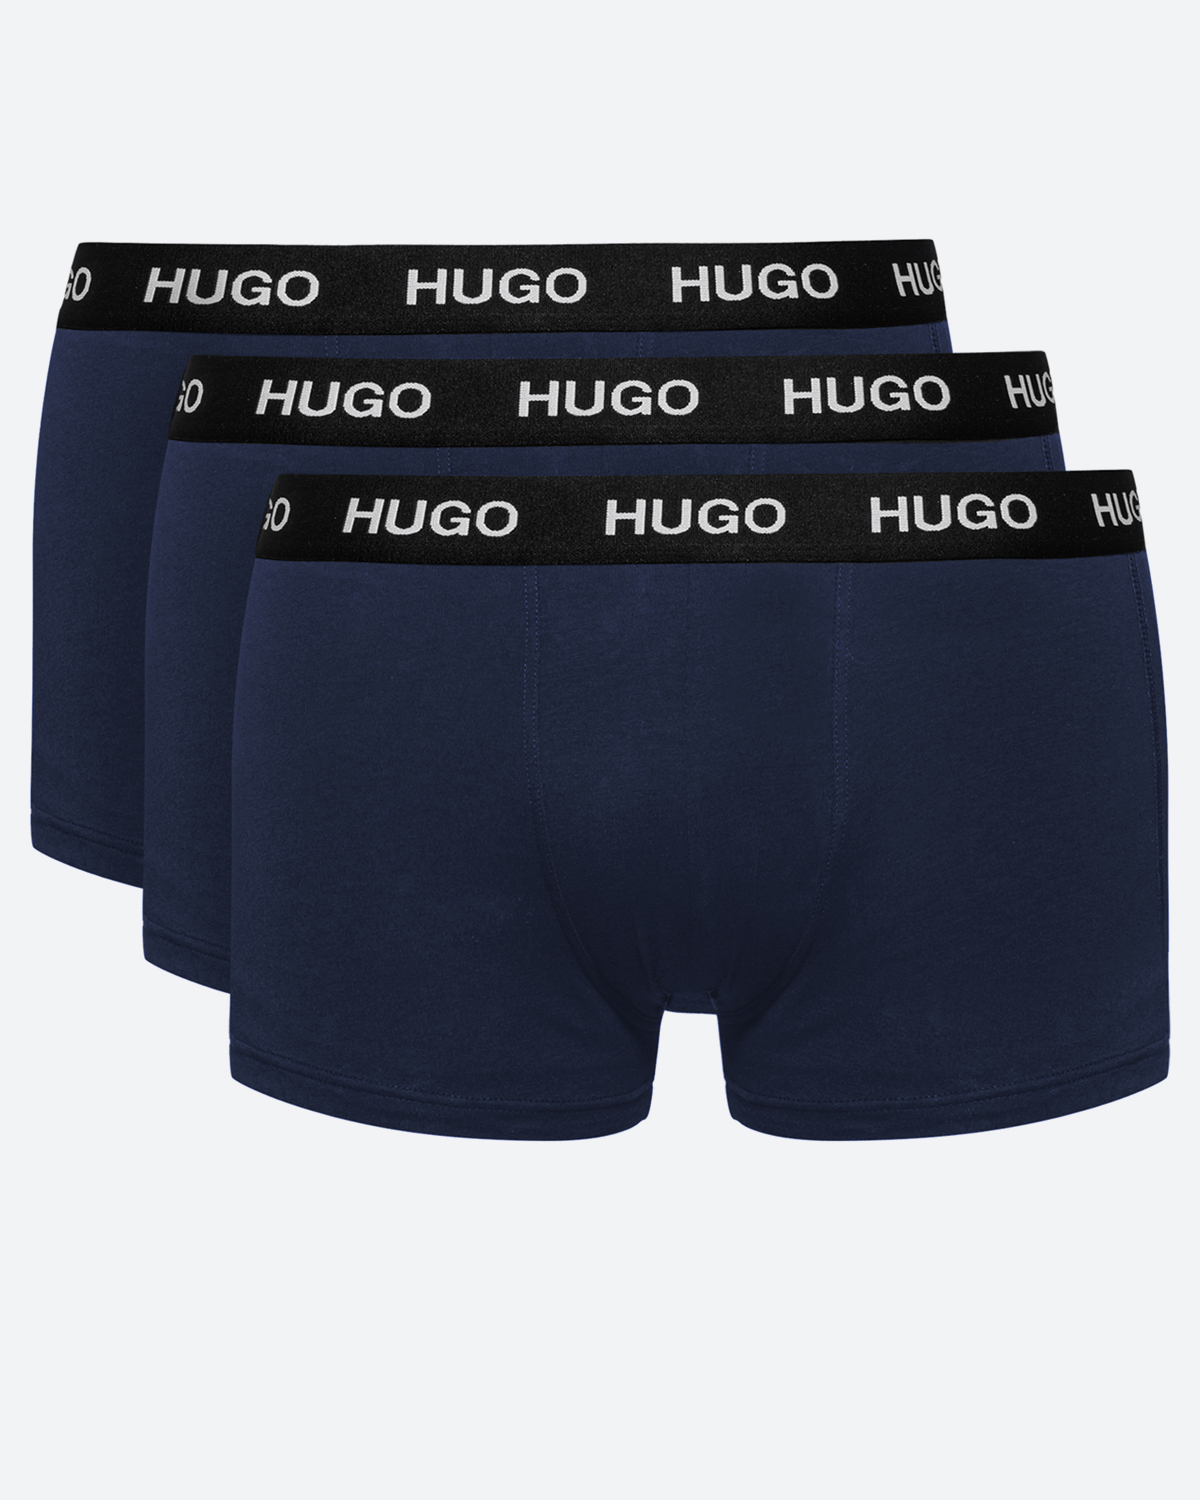 Hugo размеры. Трусы Хьюго босс мужские. Трусы Hugo Boss мужские 3 пары. Трусы босс Хуго черные. Трусы Хьюго босс черные.